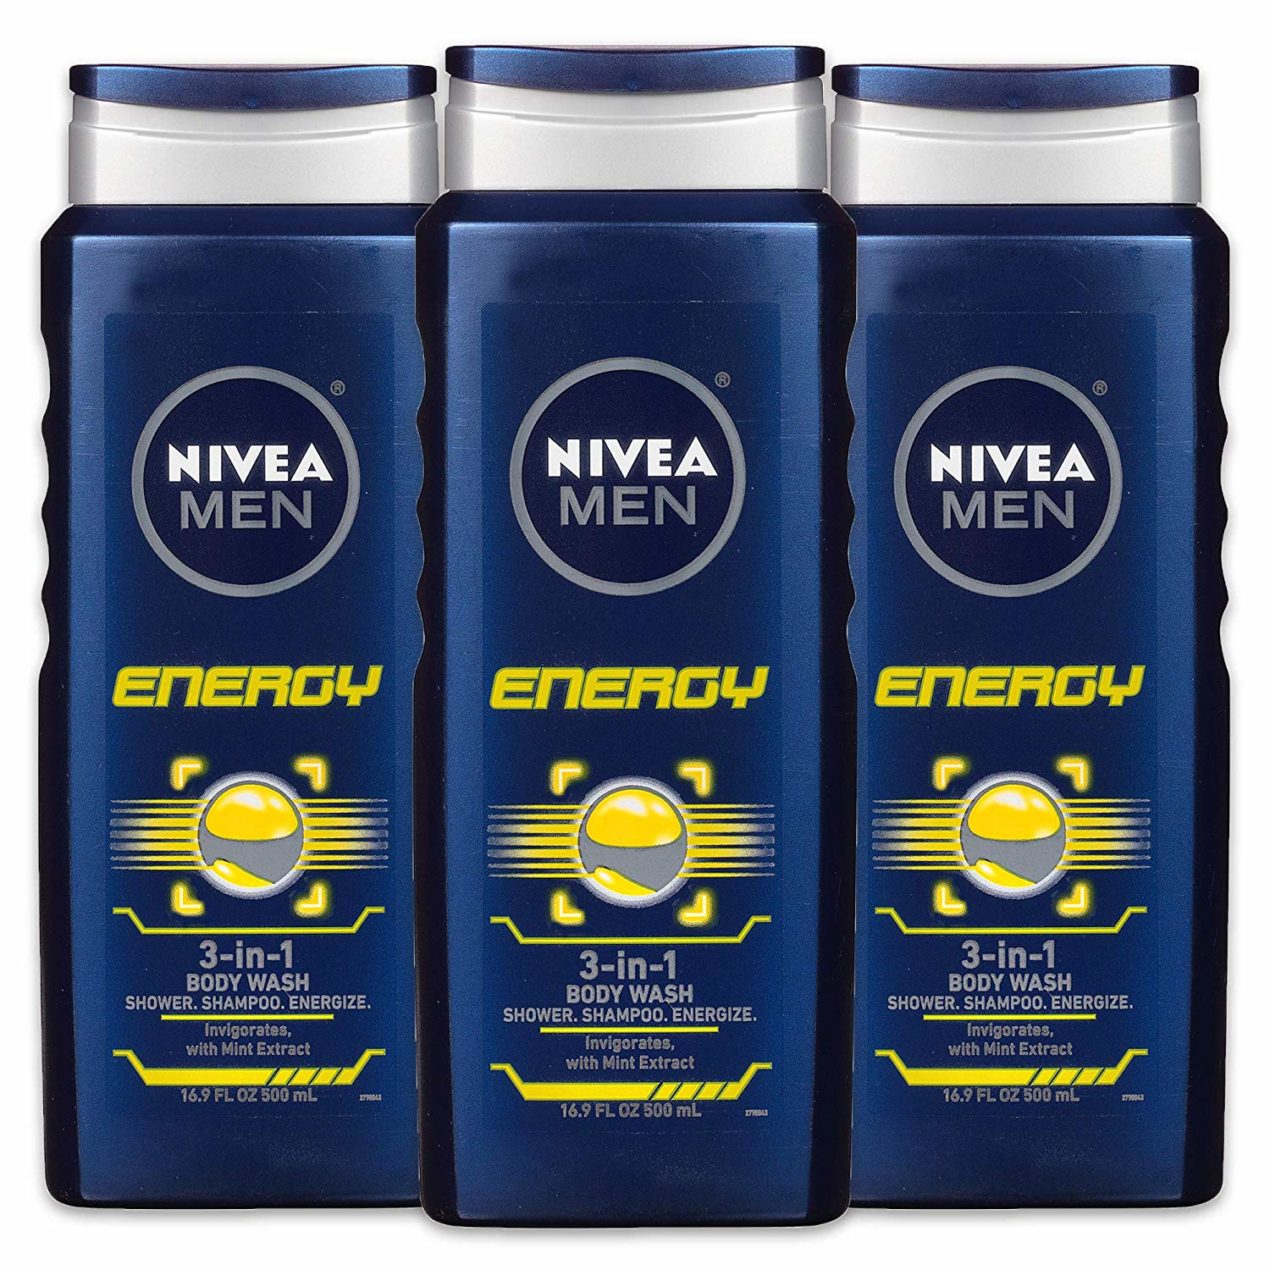 Nivea Energy Body Wash